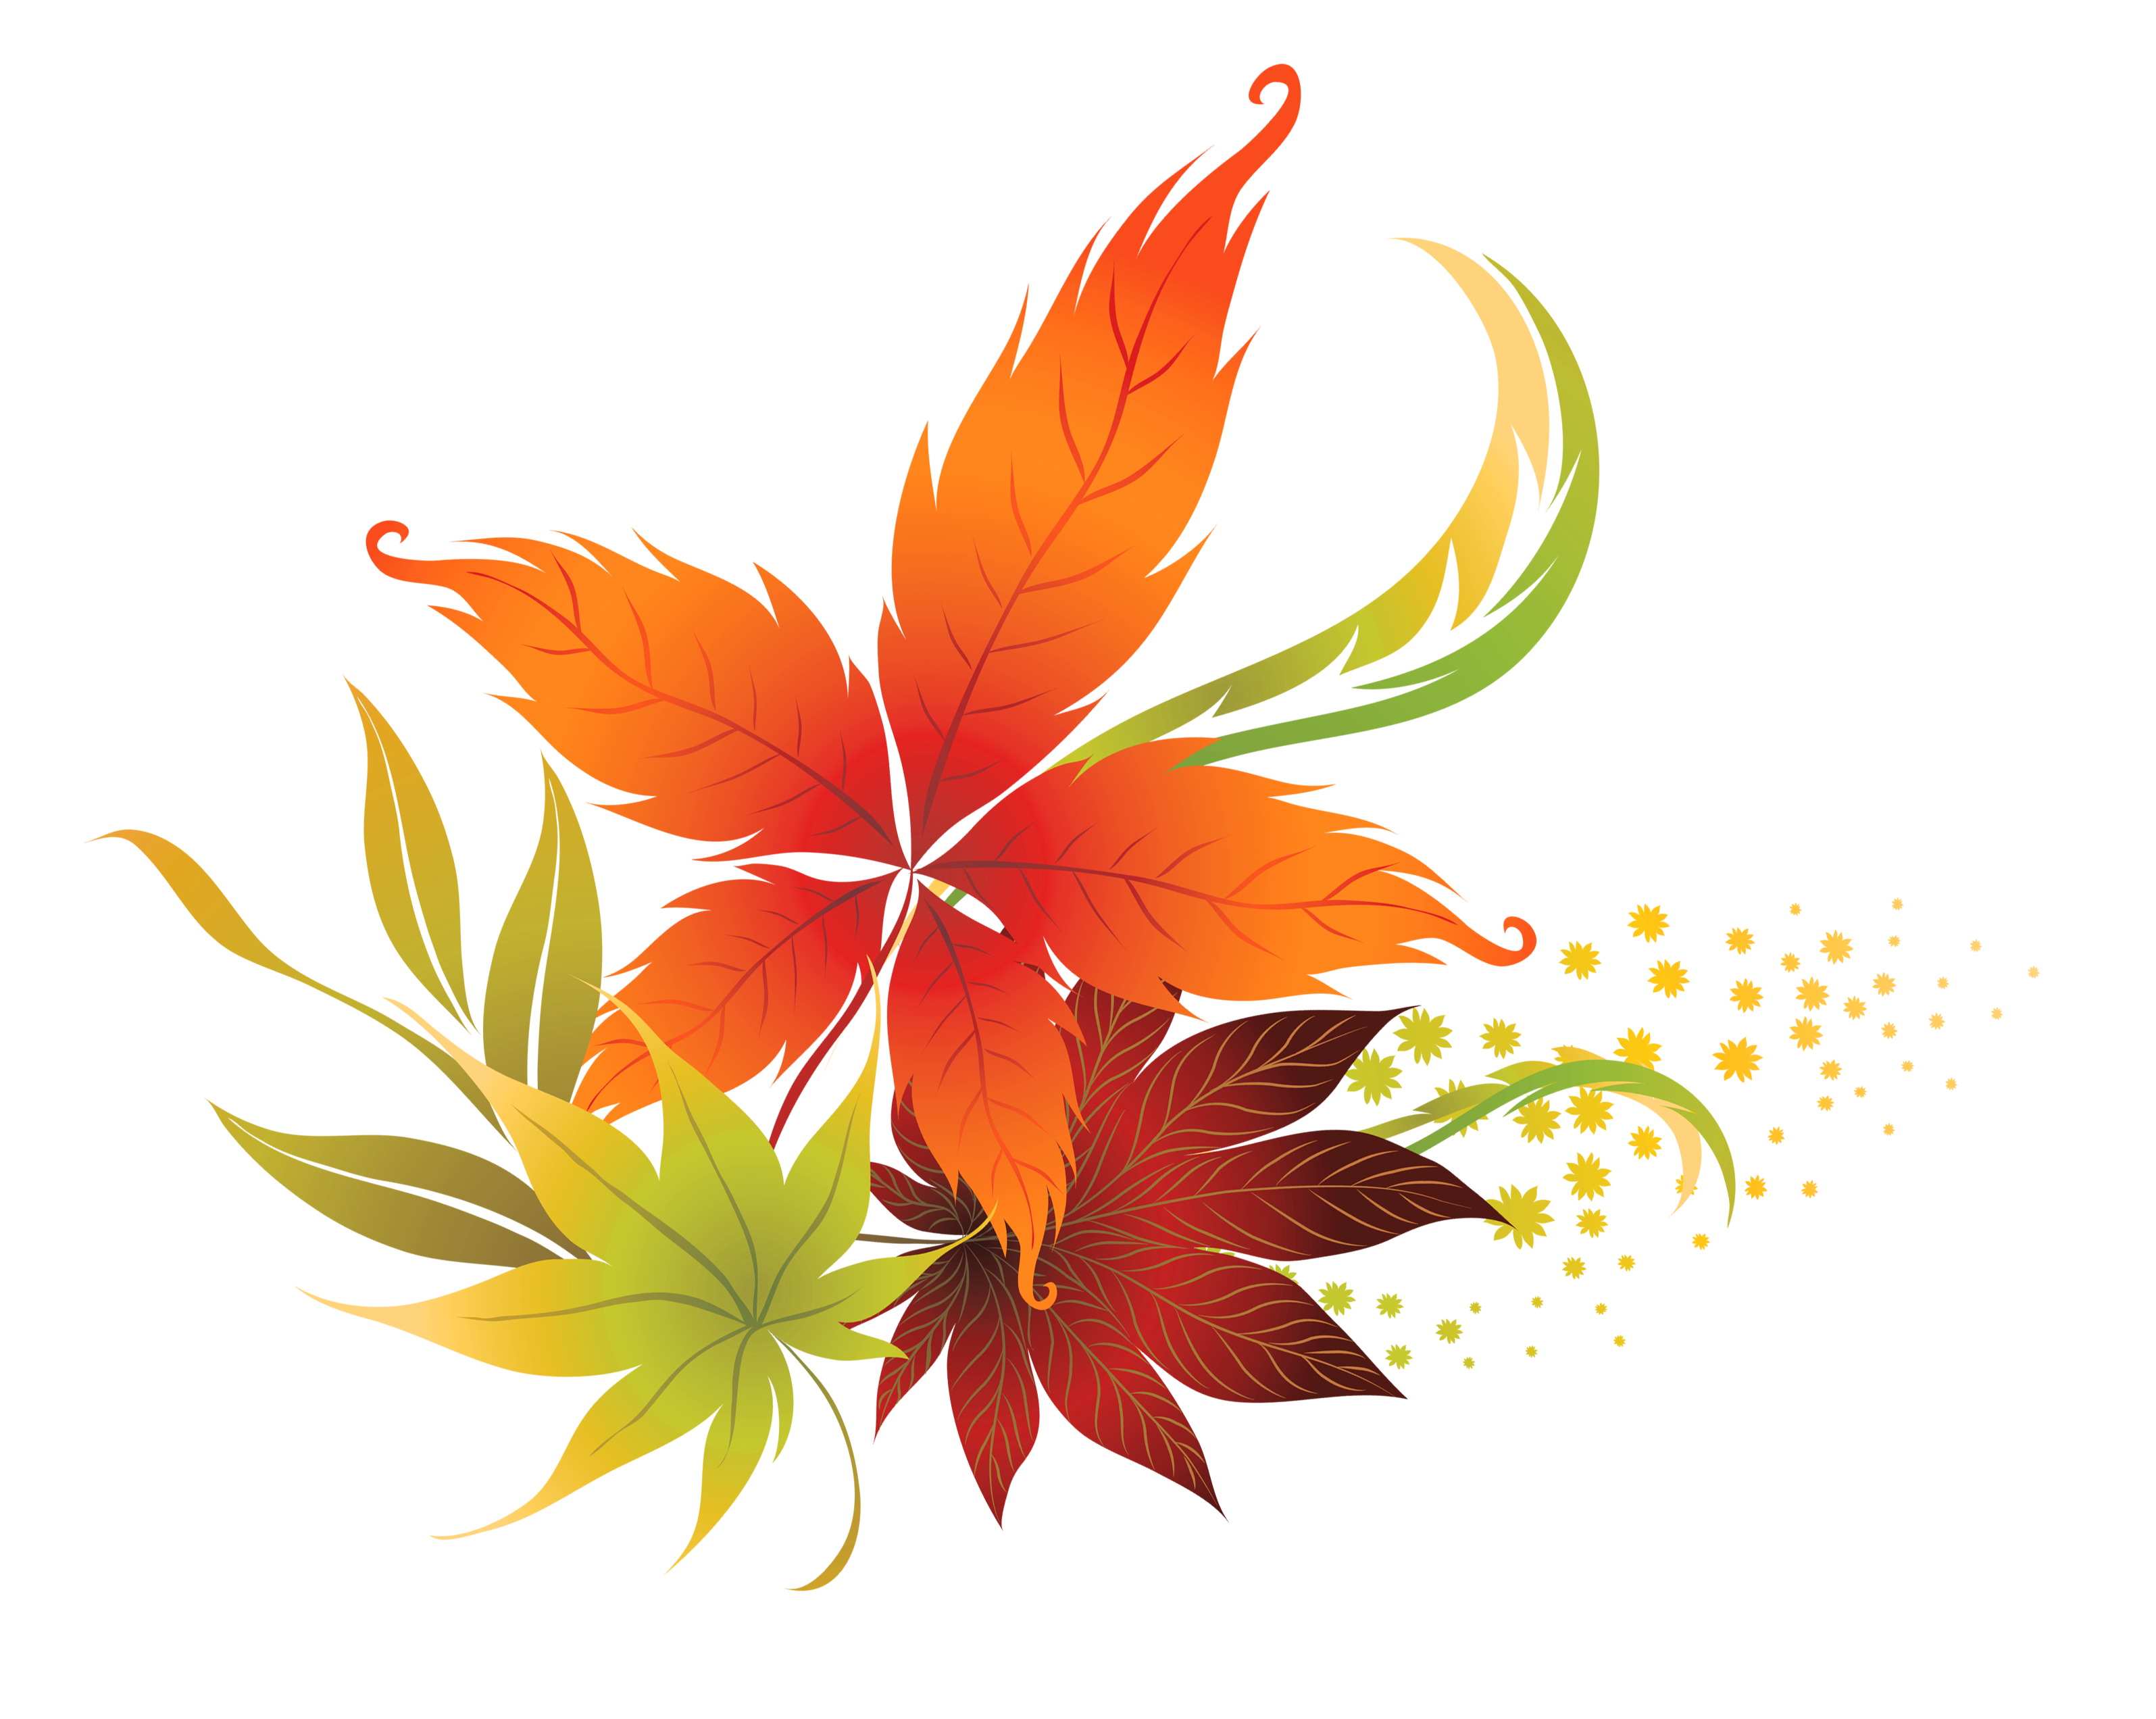 Fall leaves clip art vector